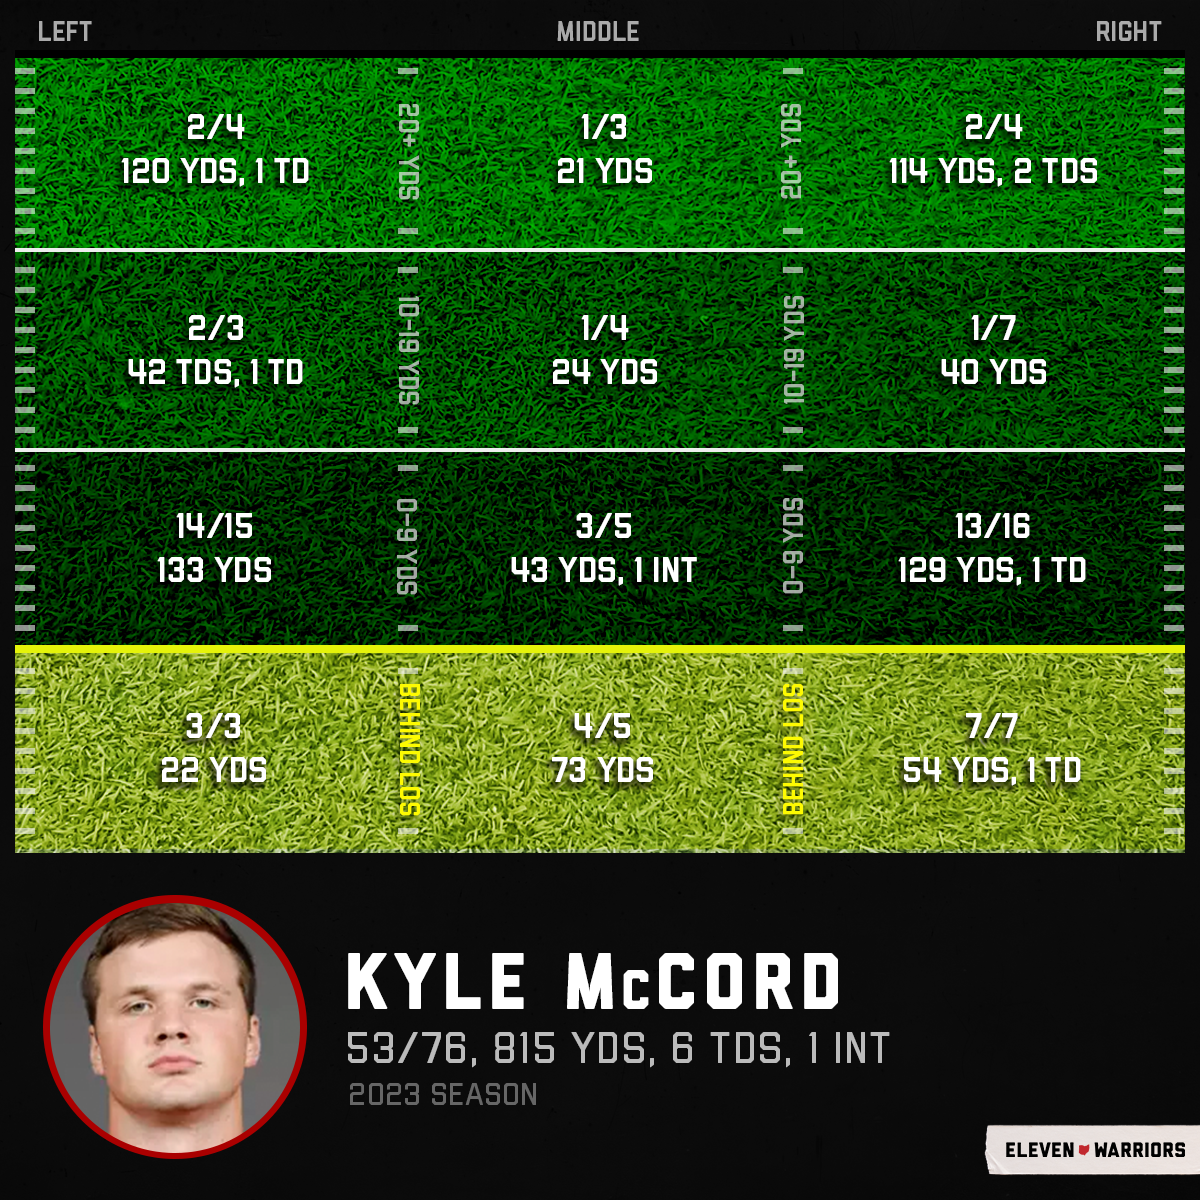 Kyle McCord through three games